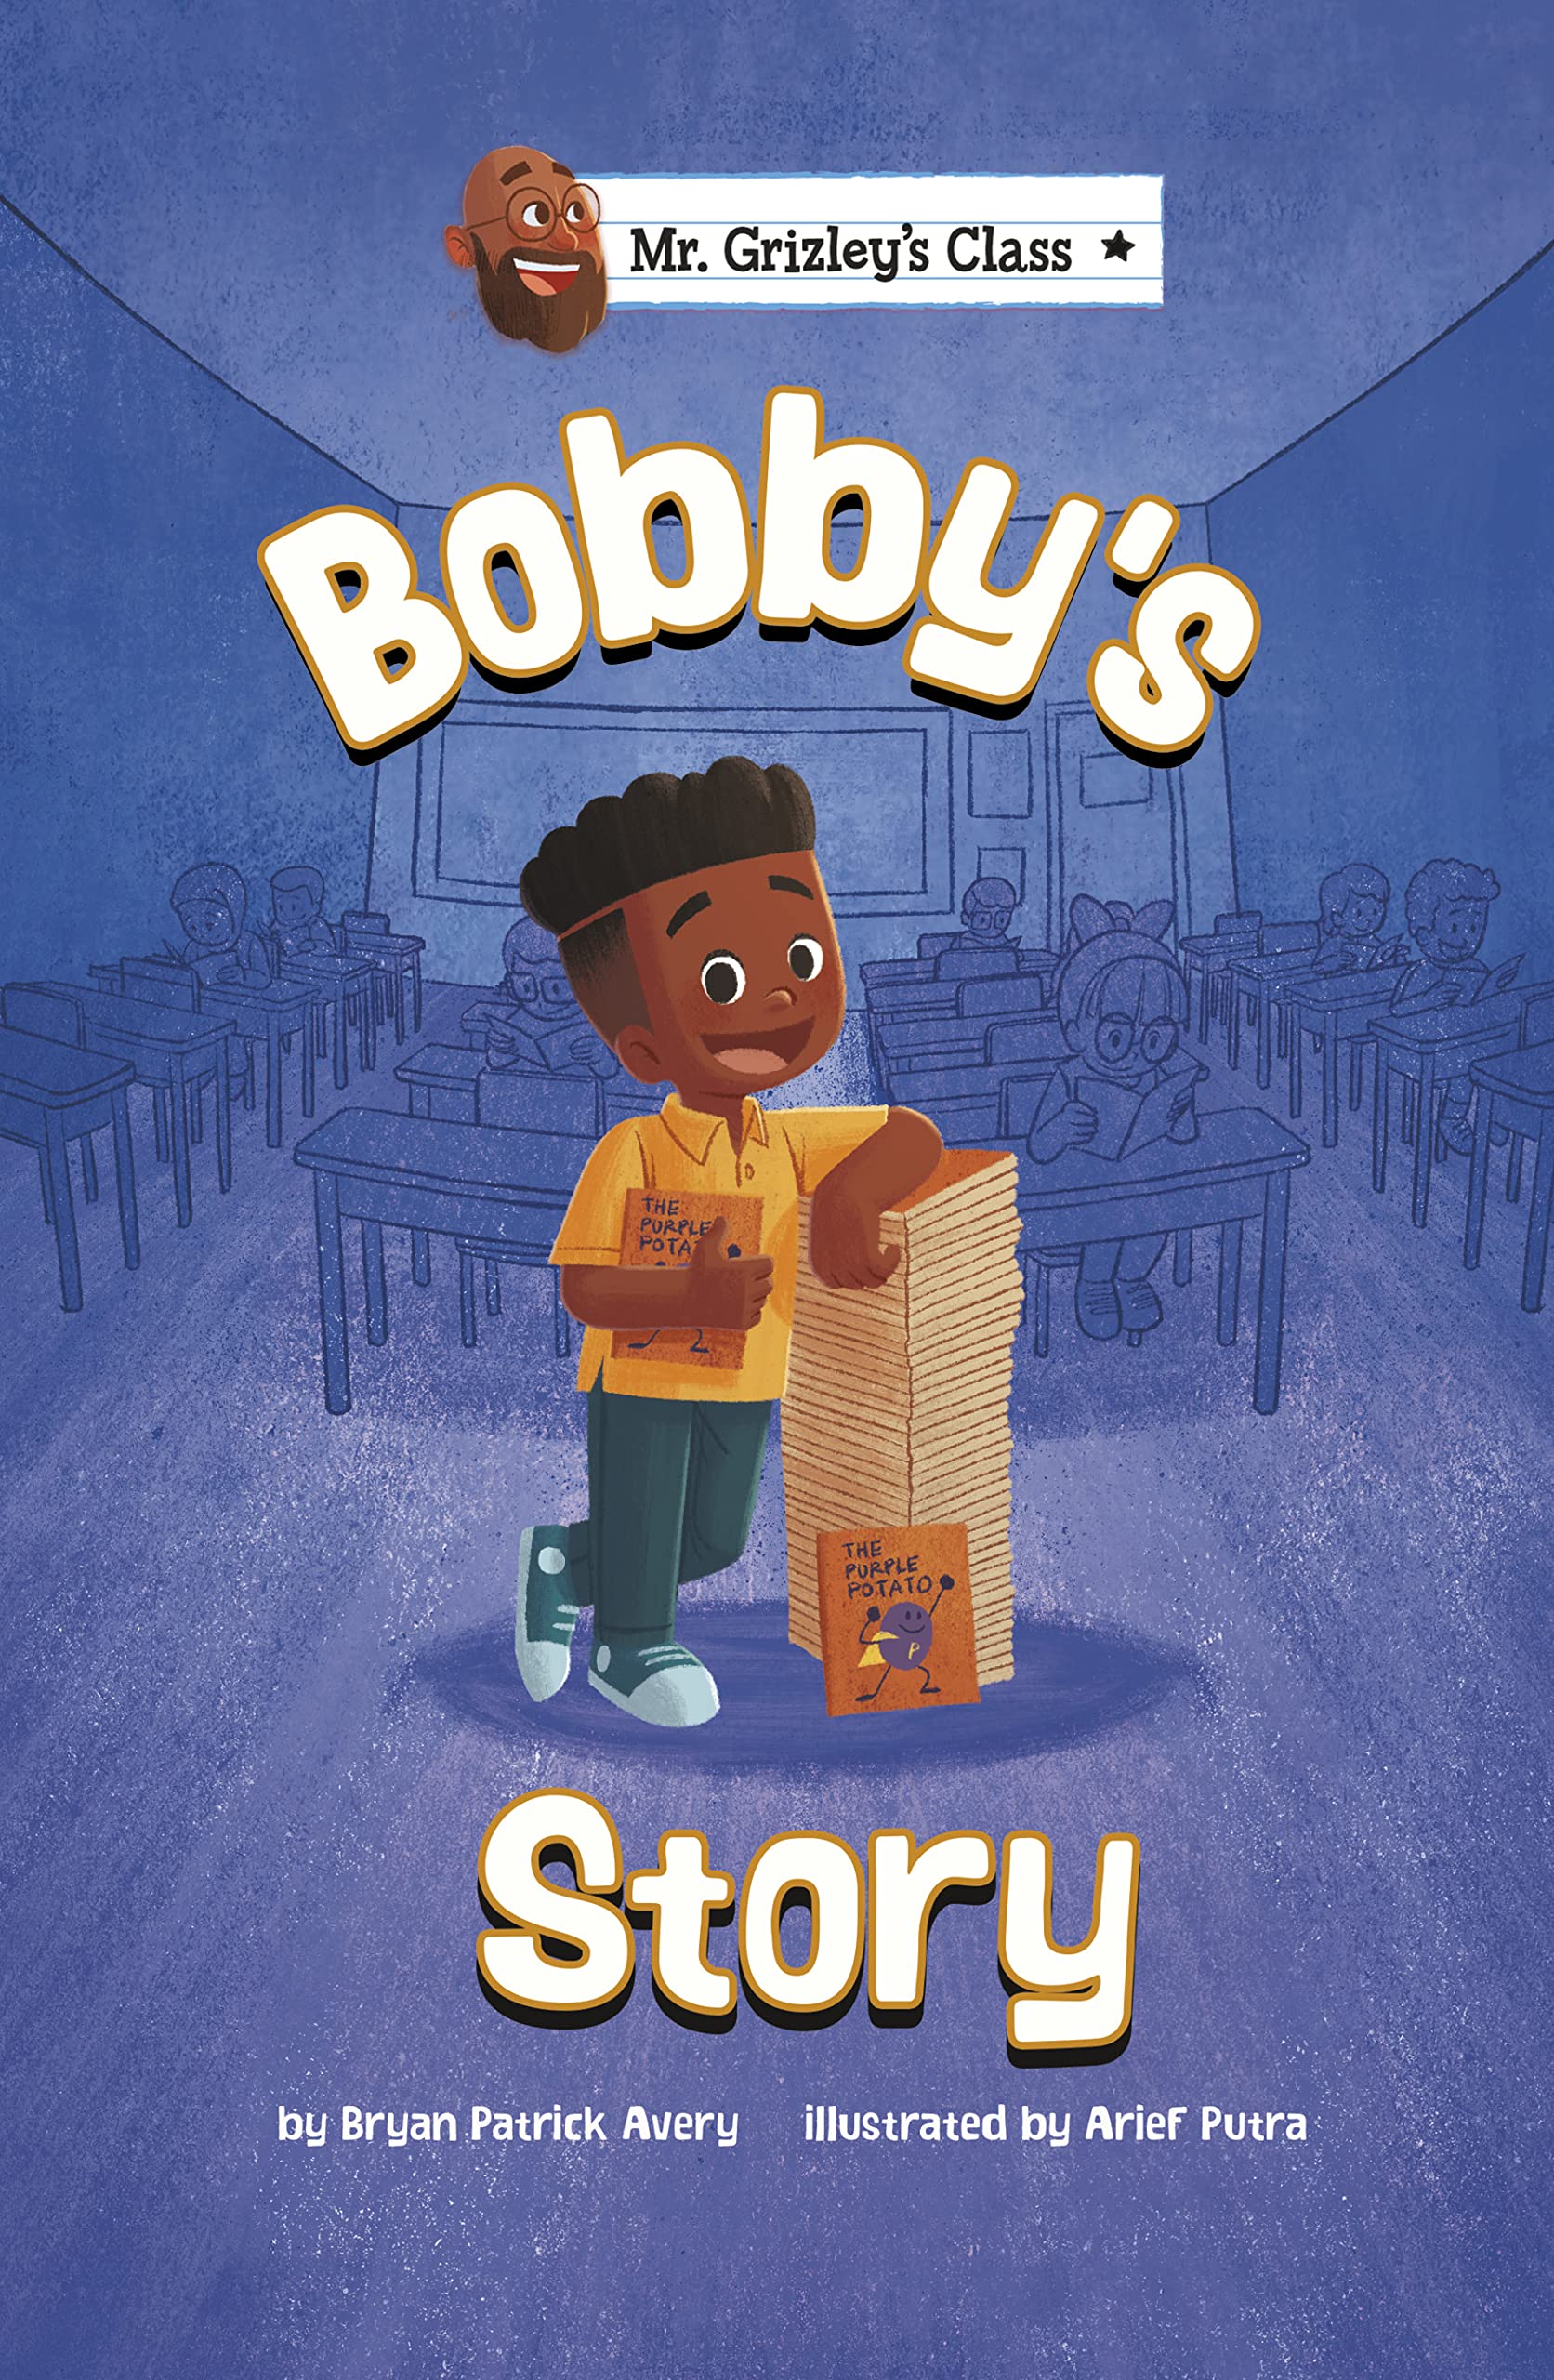 Bobby's Story